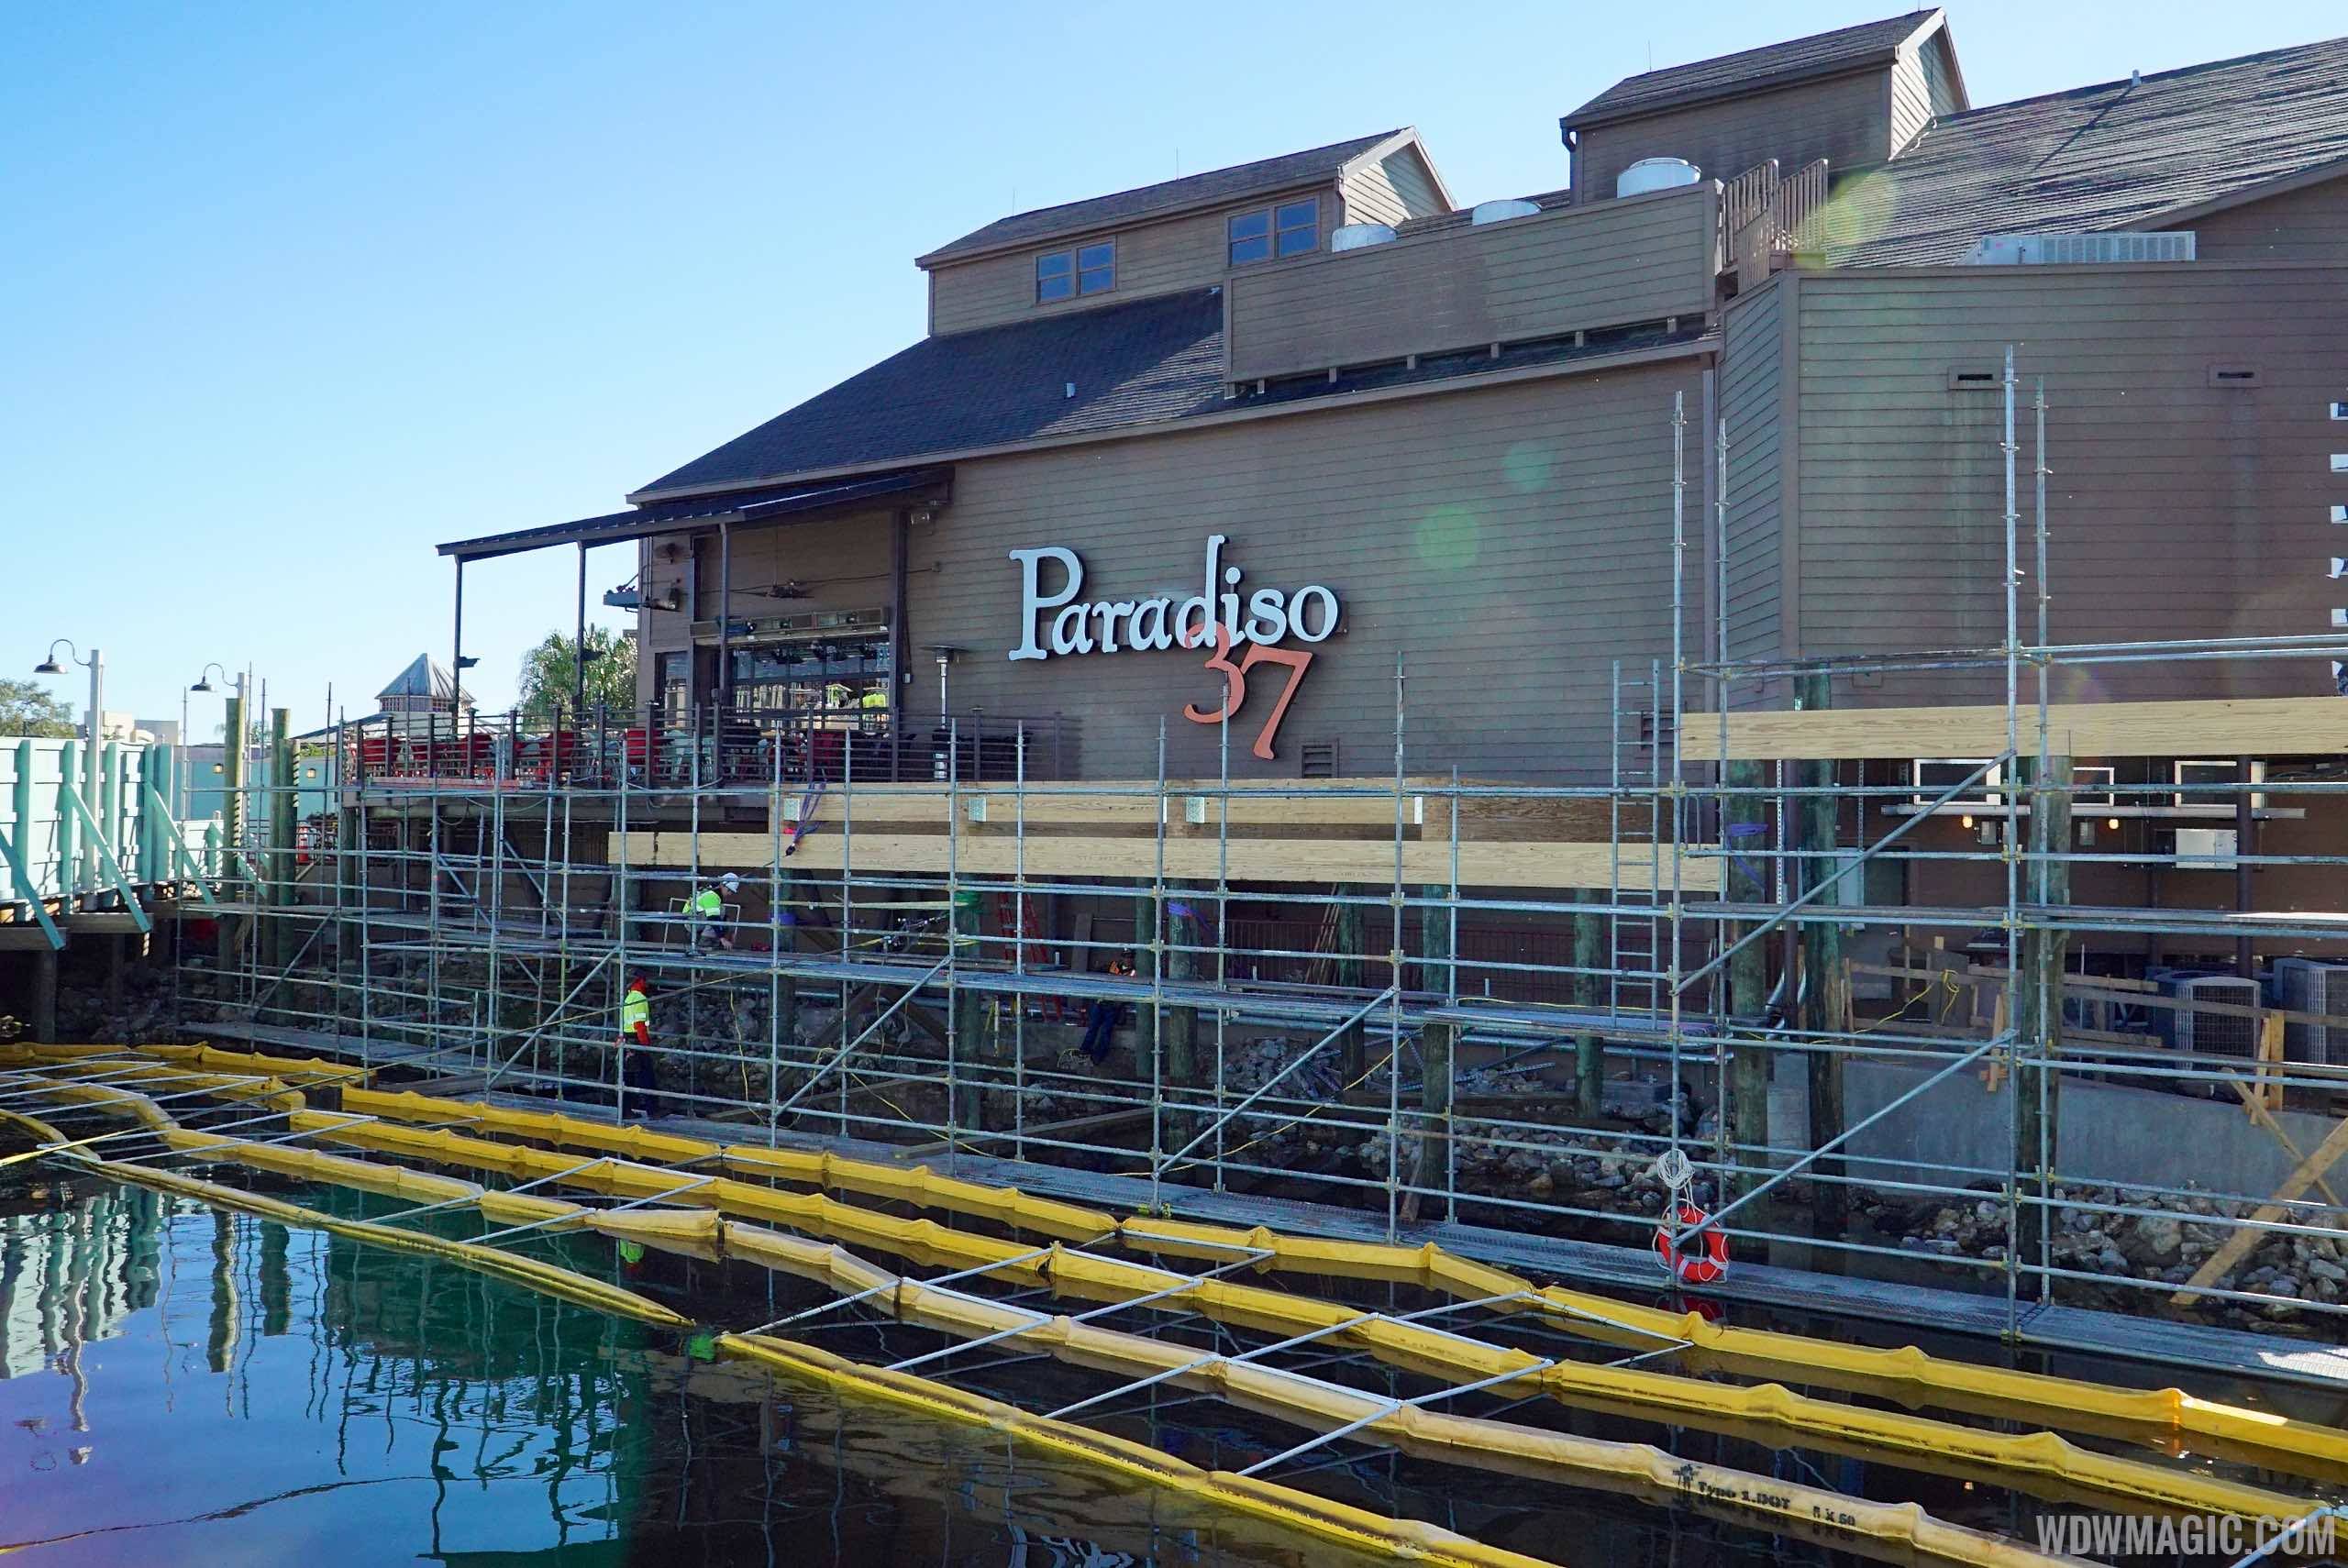 PHOTOS - Paradiso 37 expanding as part of Disney Springs redevelopment